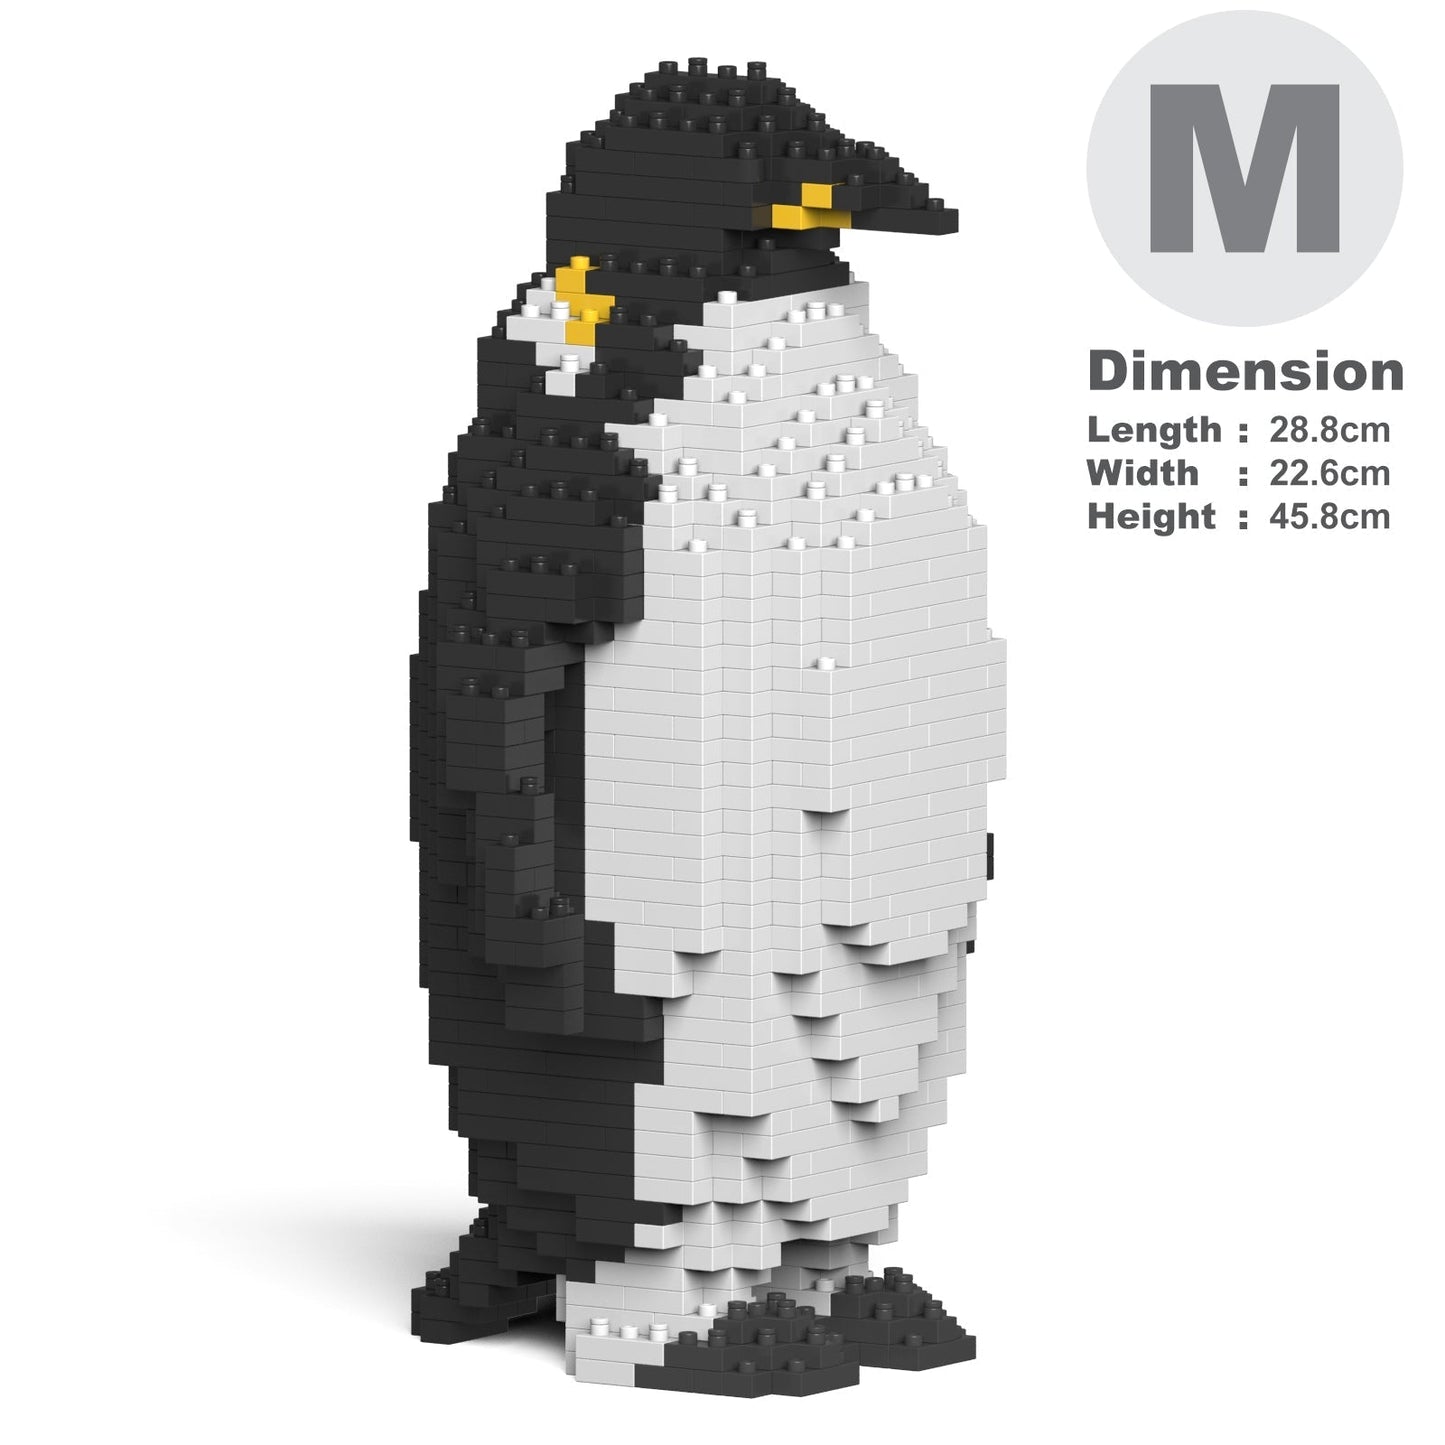 Emperor Penguin 01